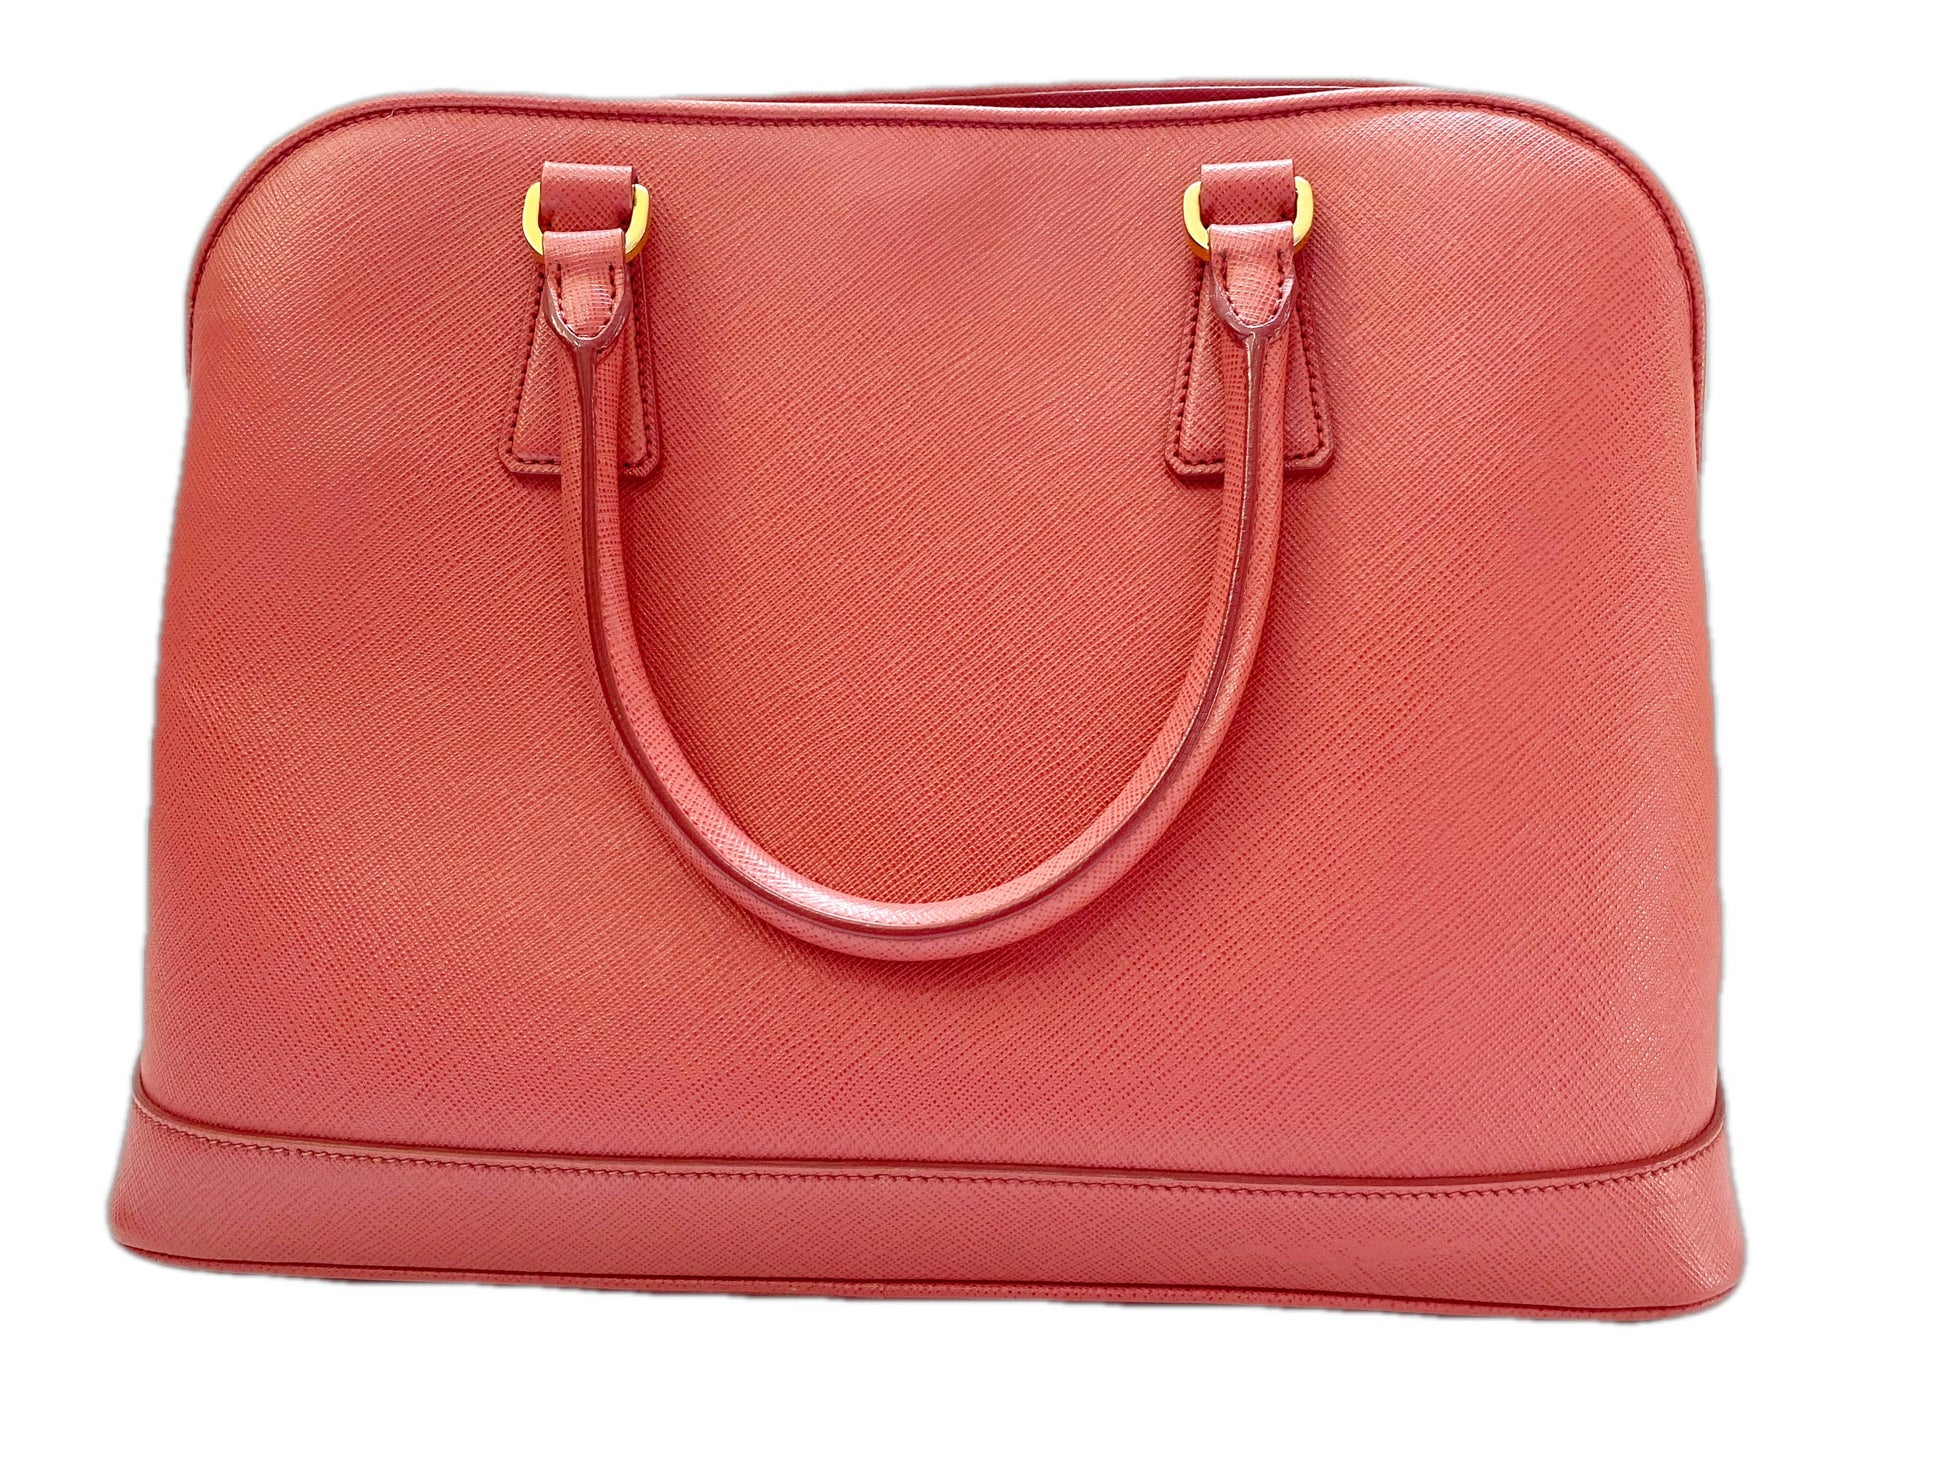 Prada Saffiano Lux Medium Promenade Bag in Fuoco/Red (Model No